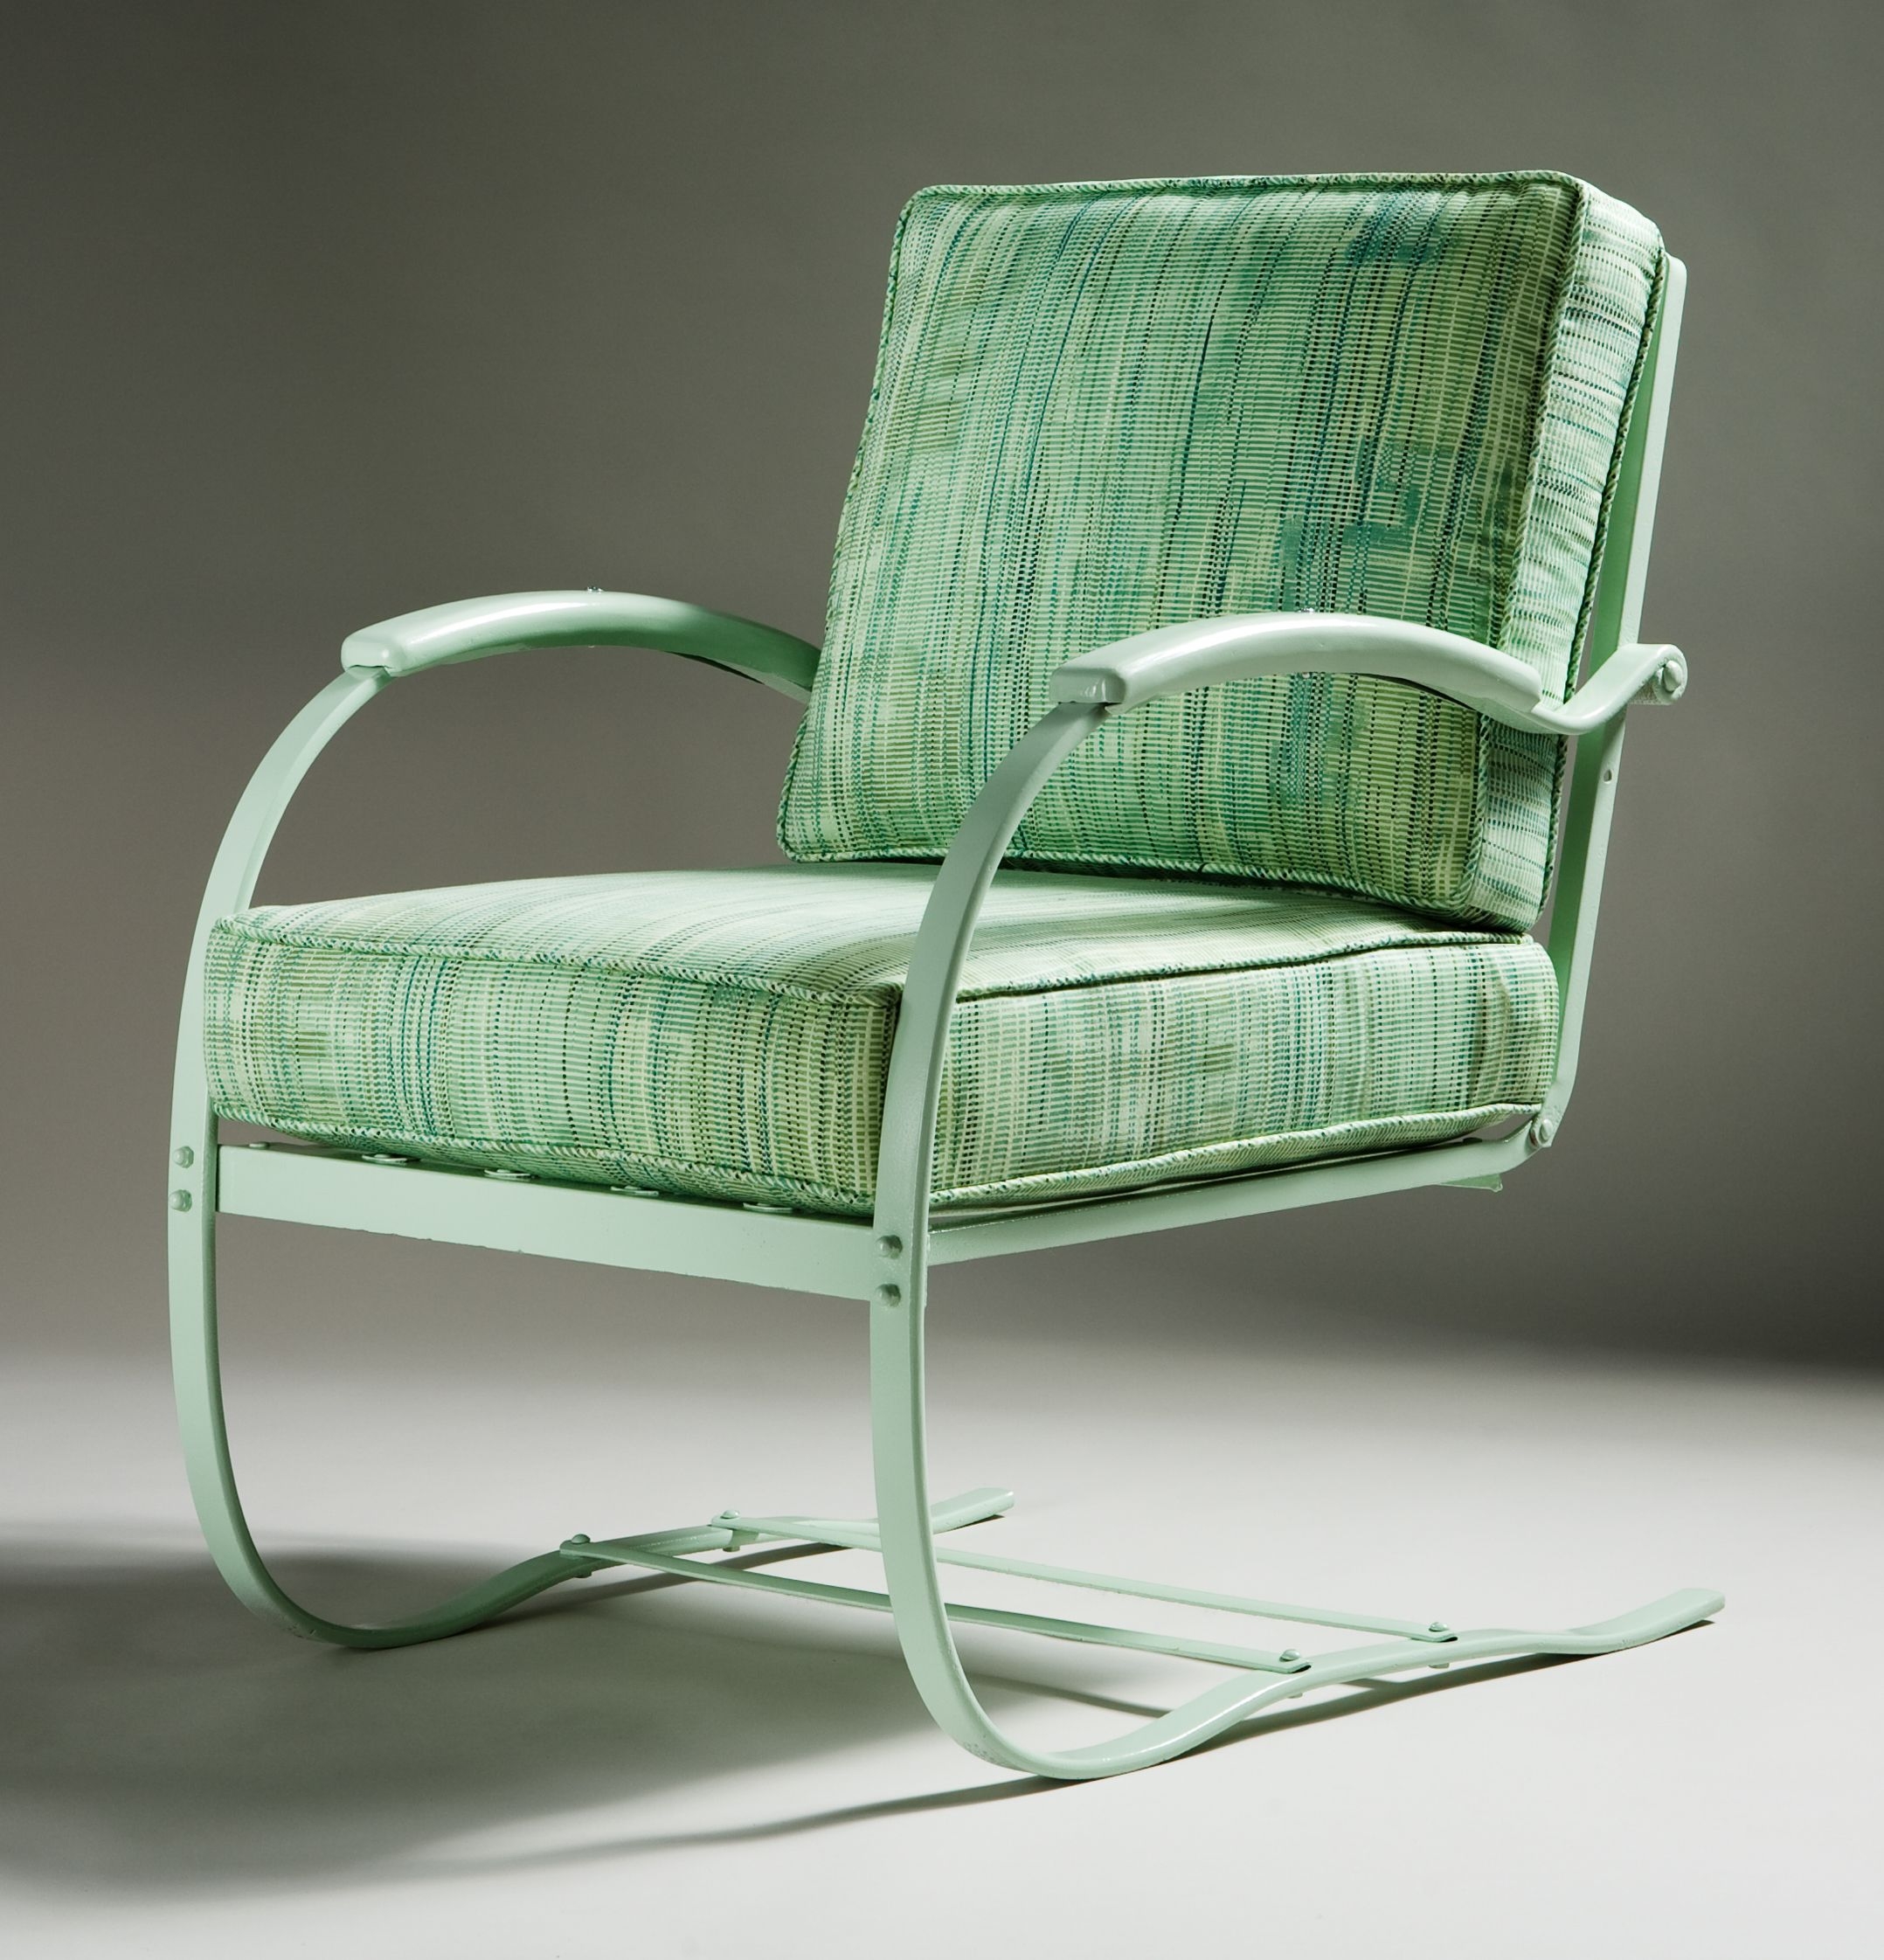 Vintage Metal Lawn Chairs Visualhunt, Antique Steel Outdoor Furniture